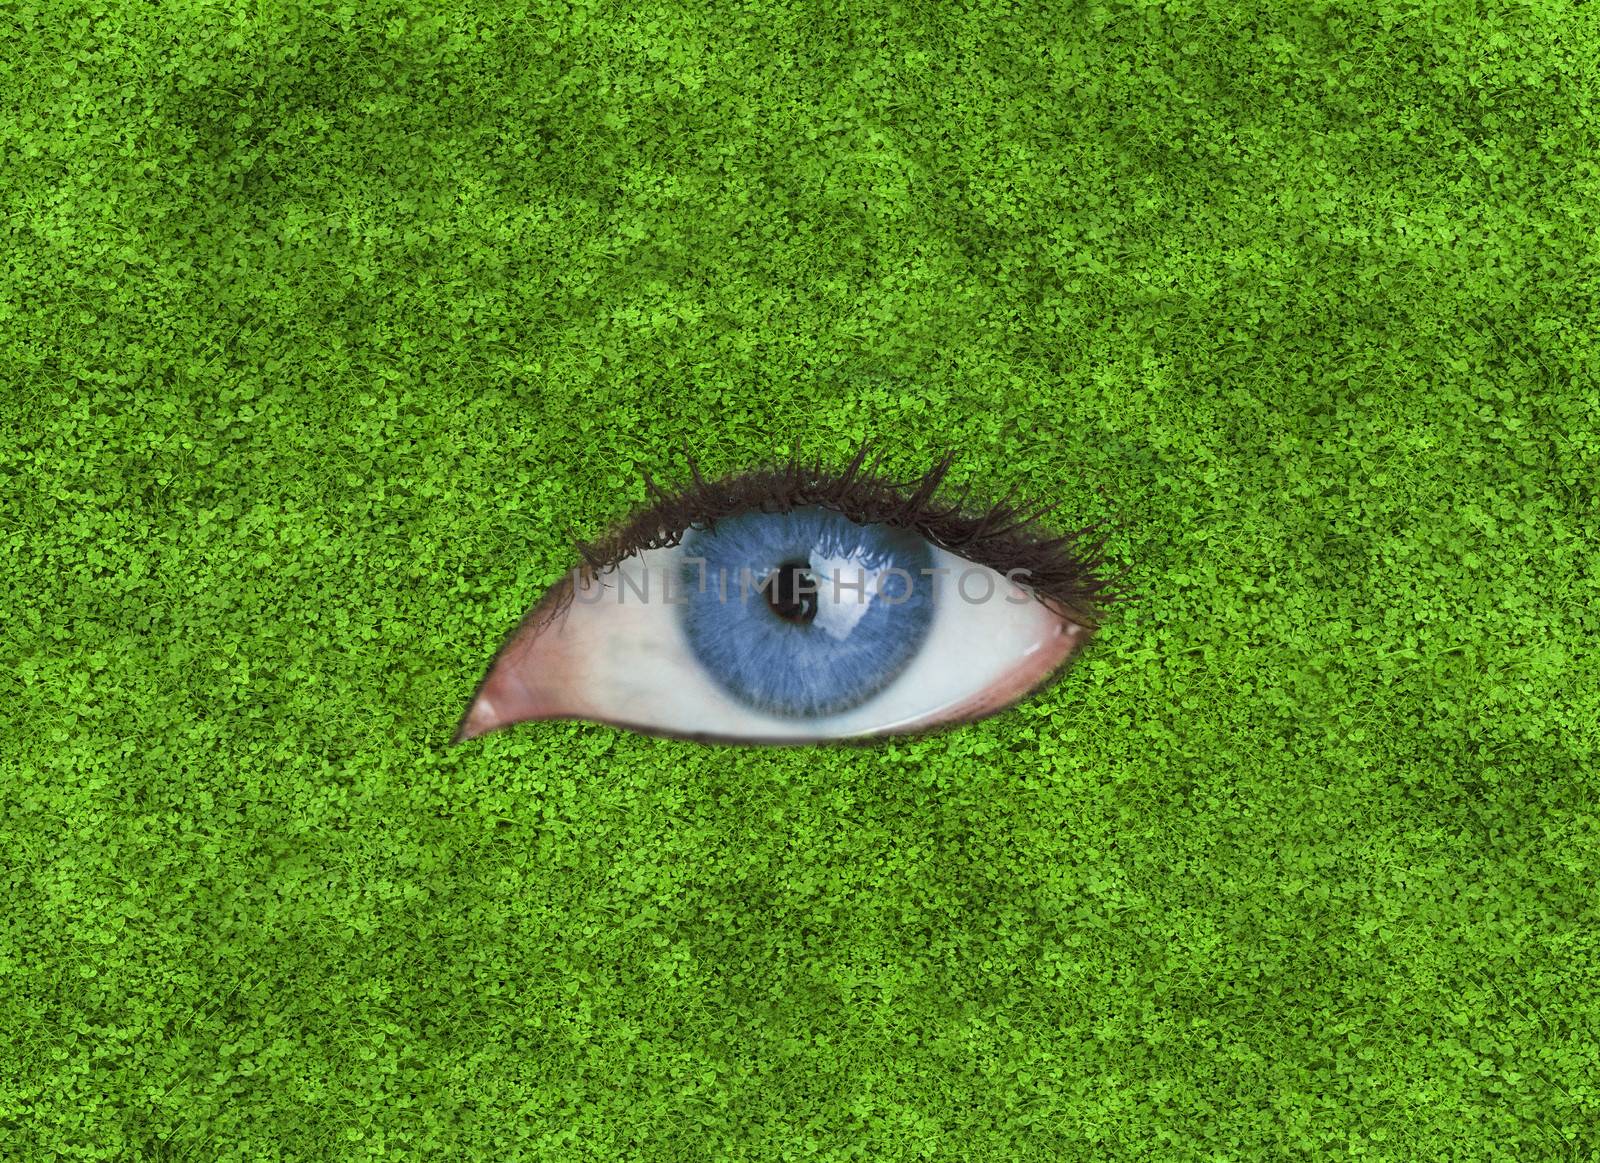 Blue eye over grass by Wavebreakmedia